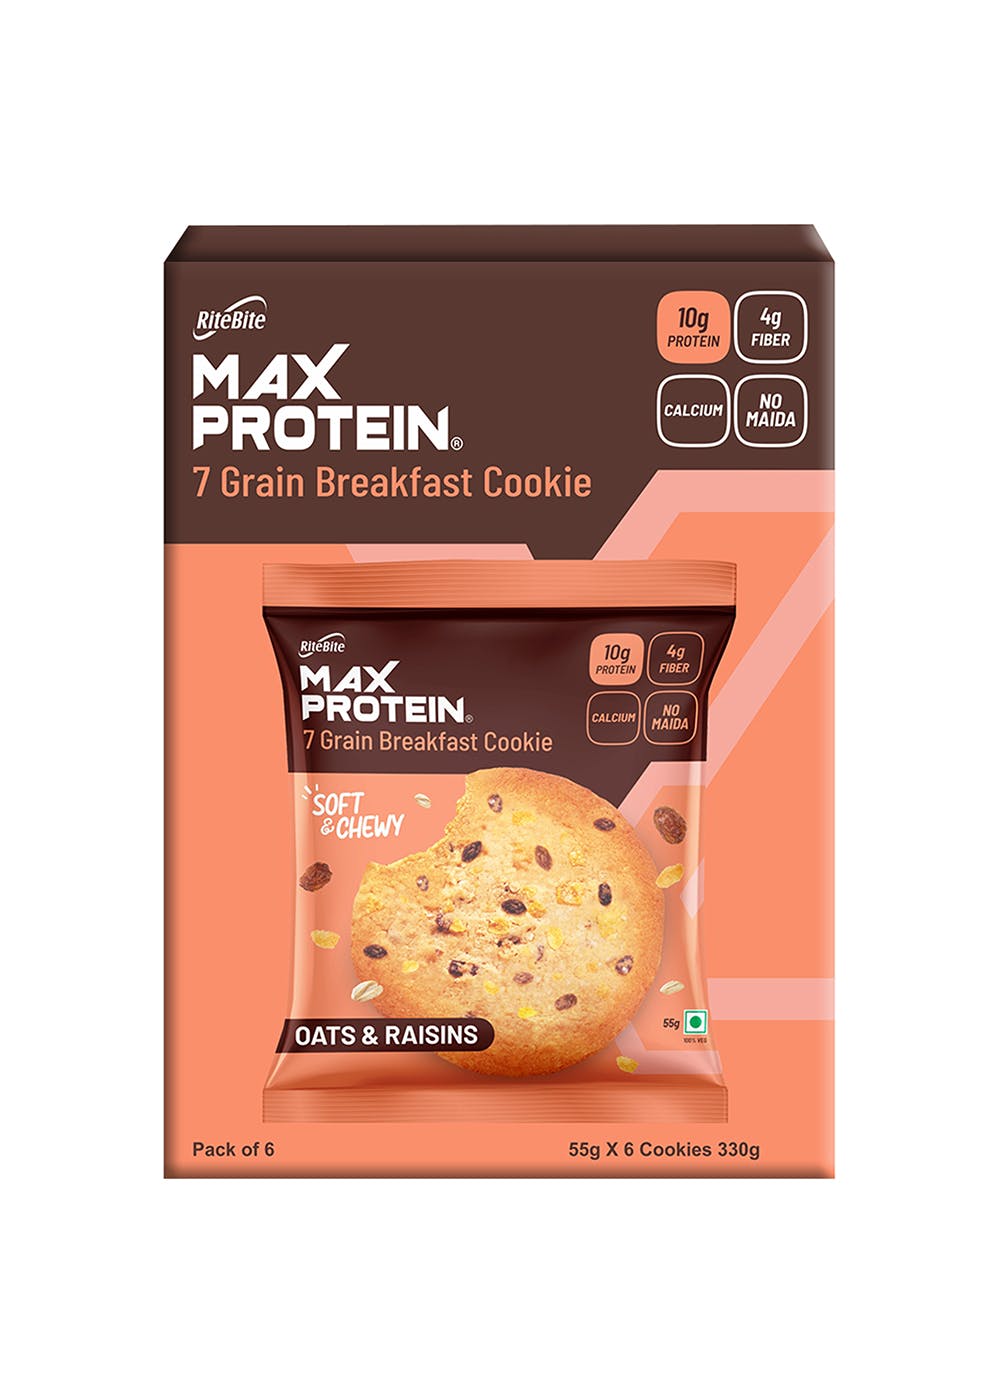 Max Protein 7 Grain Breakfast Cookie- Oats & Raisins- Pack of 6